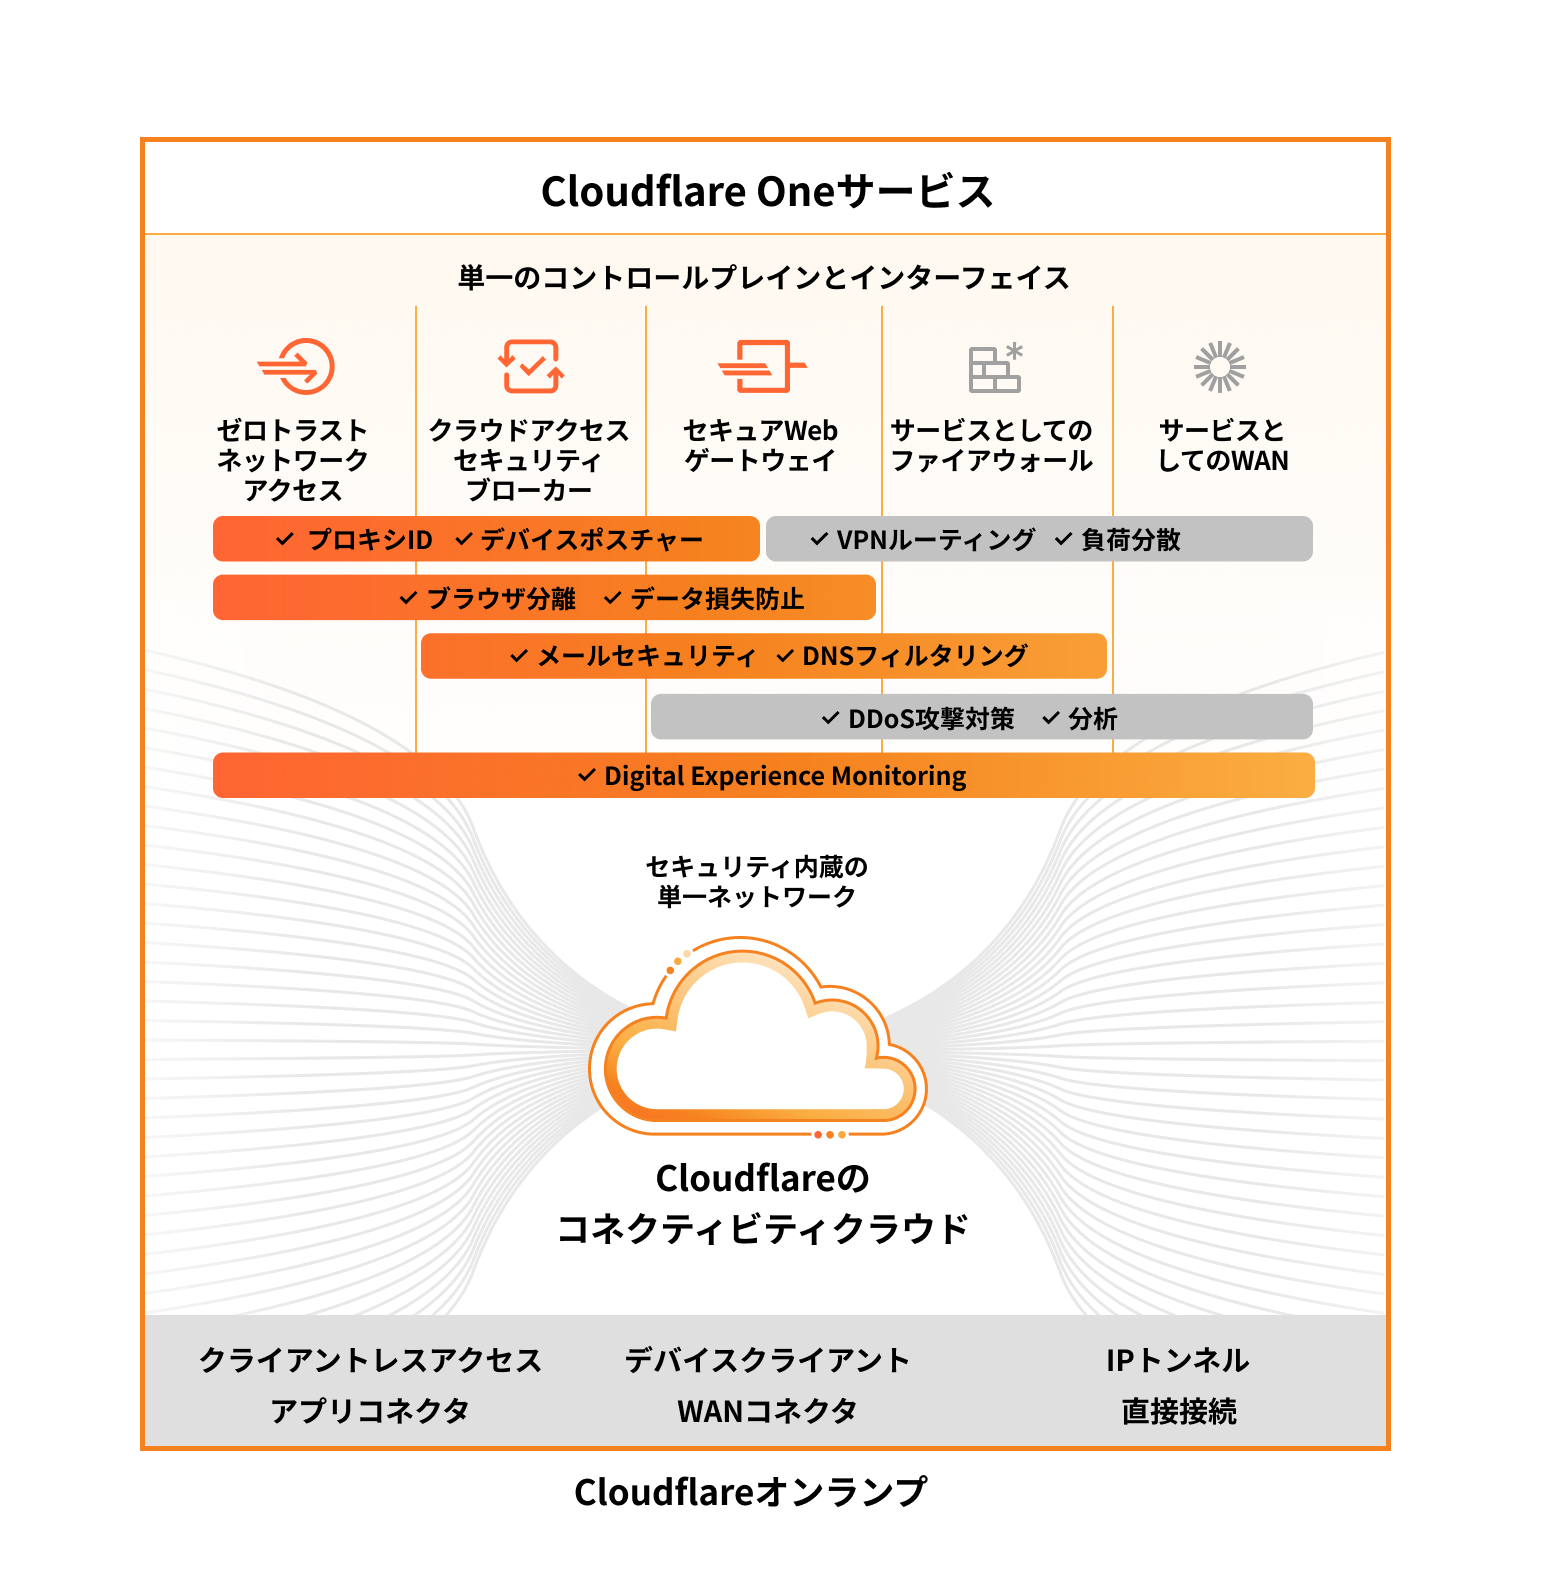 Cloudflare One Marketecture diagram